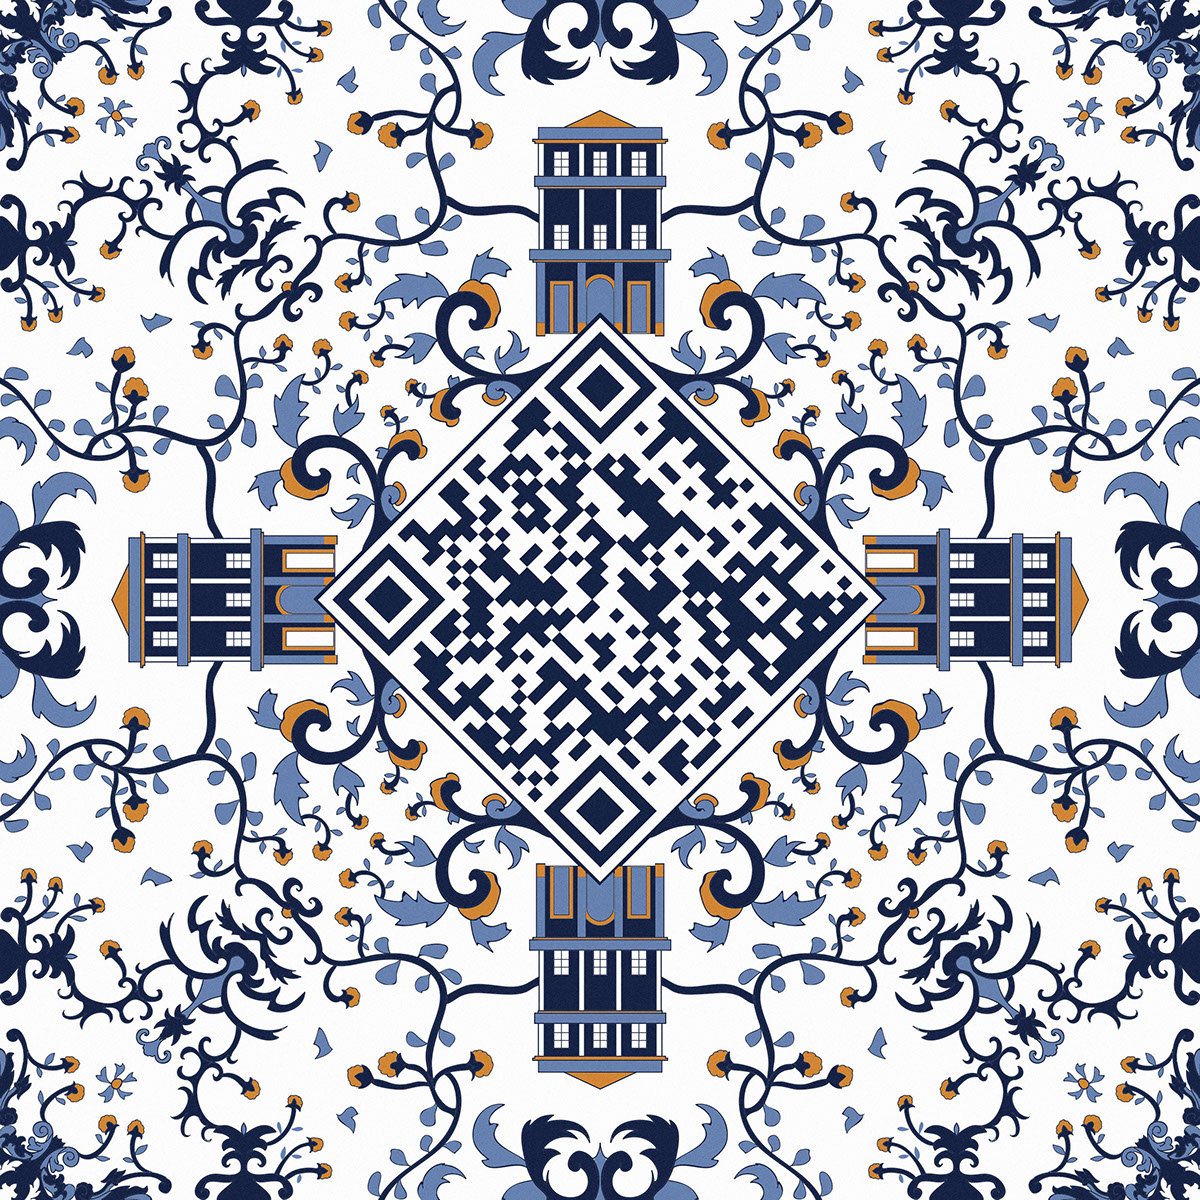 Lisbon tiles qrcode azulejos Portugal ceramic app application qrestile decorative interactive Urban city streetart azulejo